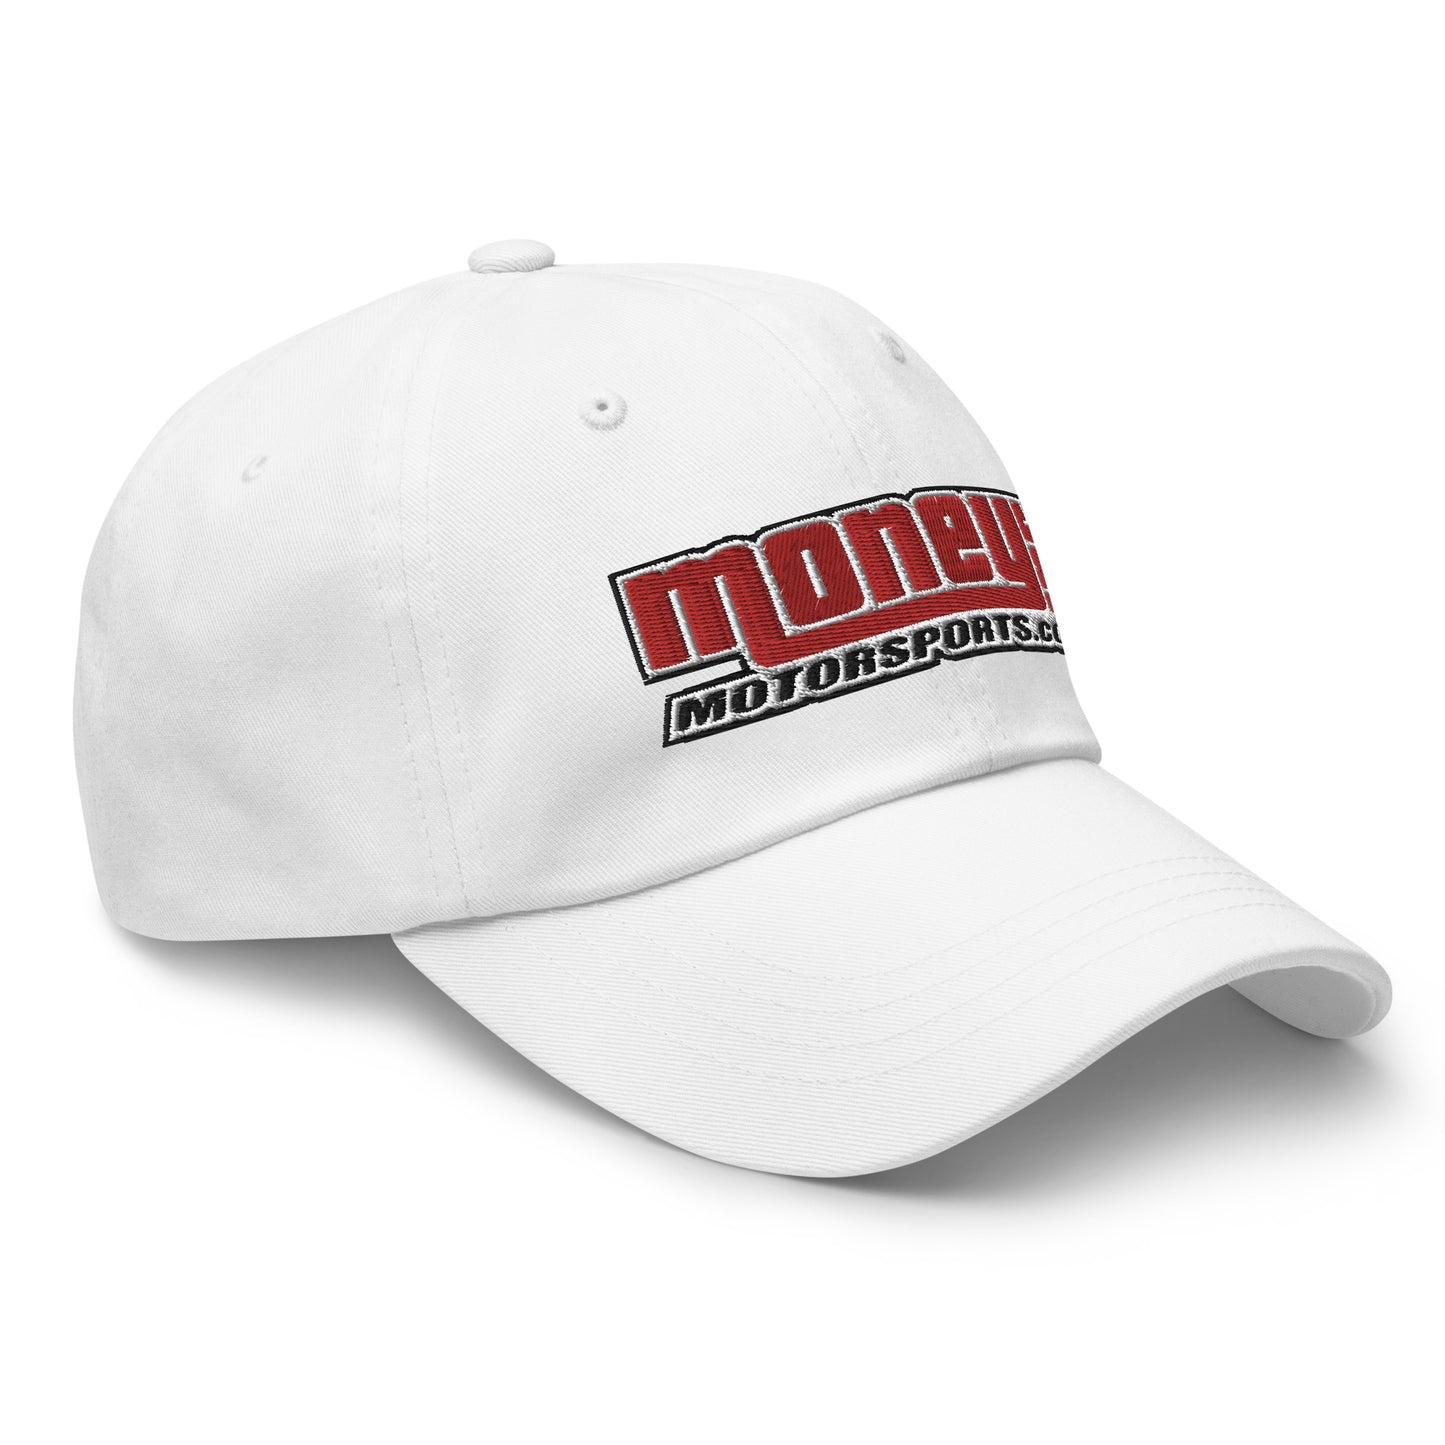 Money Inc Motorsports "Dad hat"